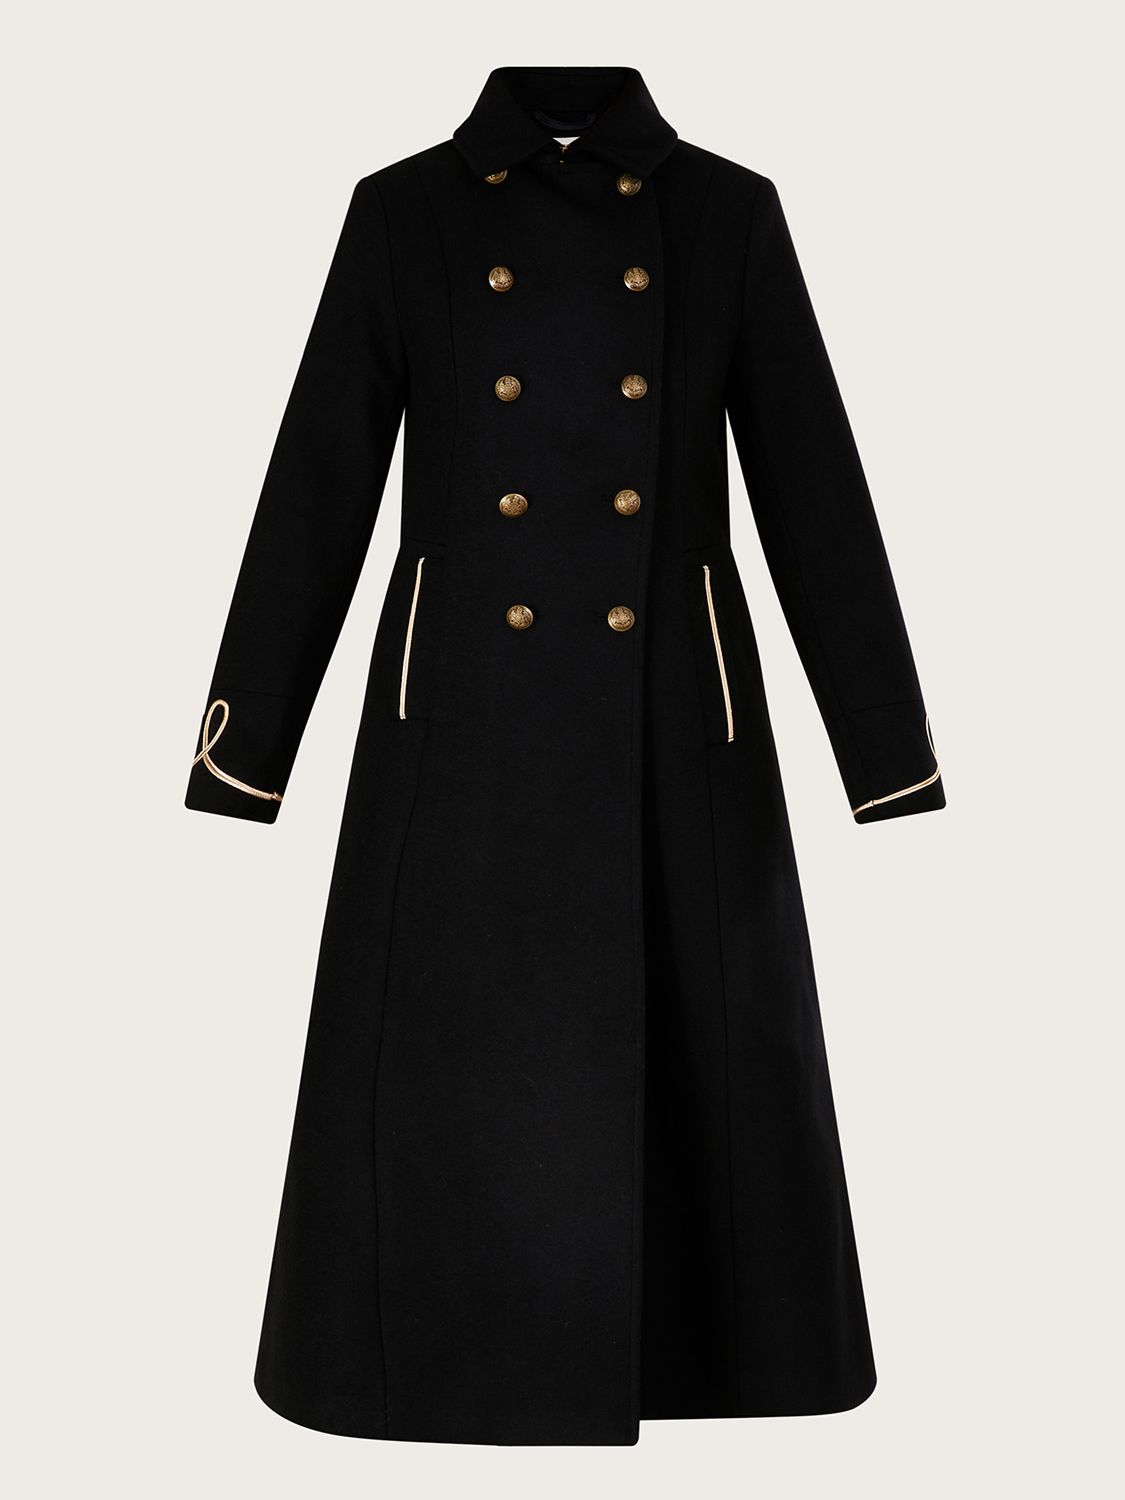 Monsoon Minnie Long Military Coat, Black at John Lewis & Partners